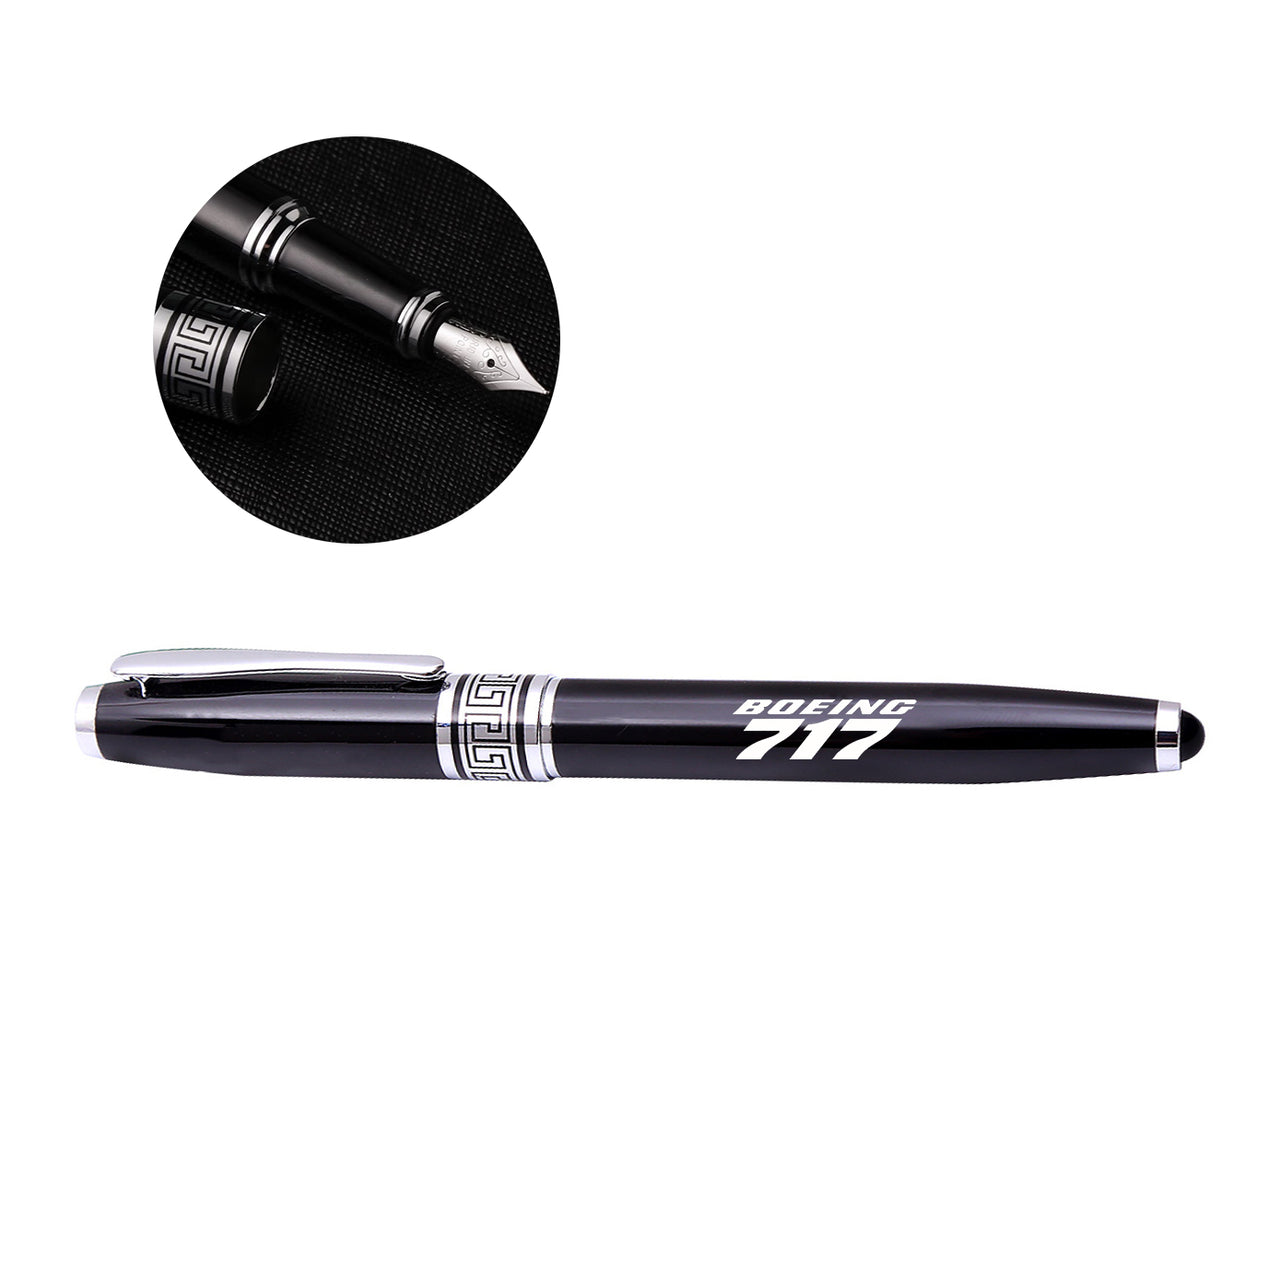 Boeing 717 & Text Designed Pens